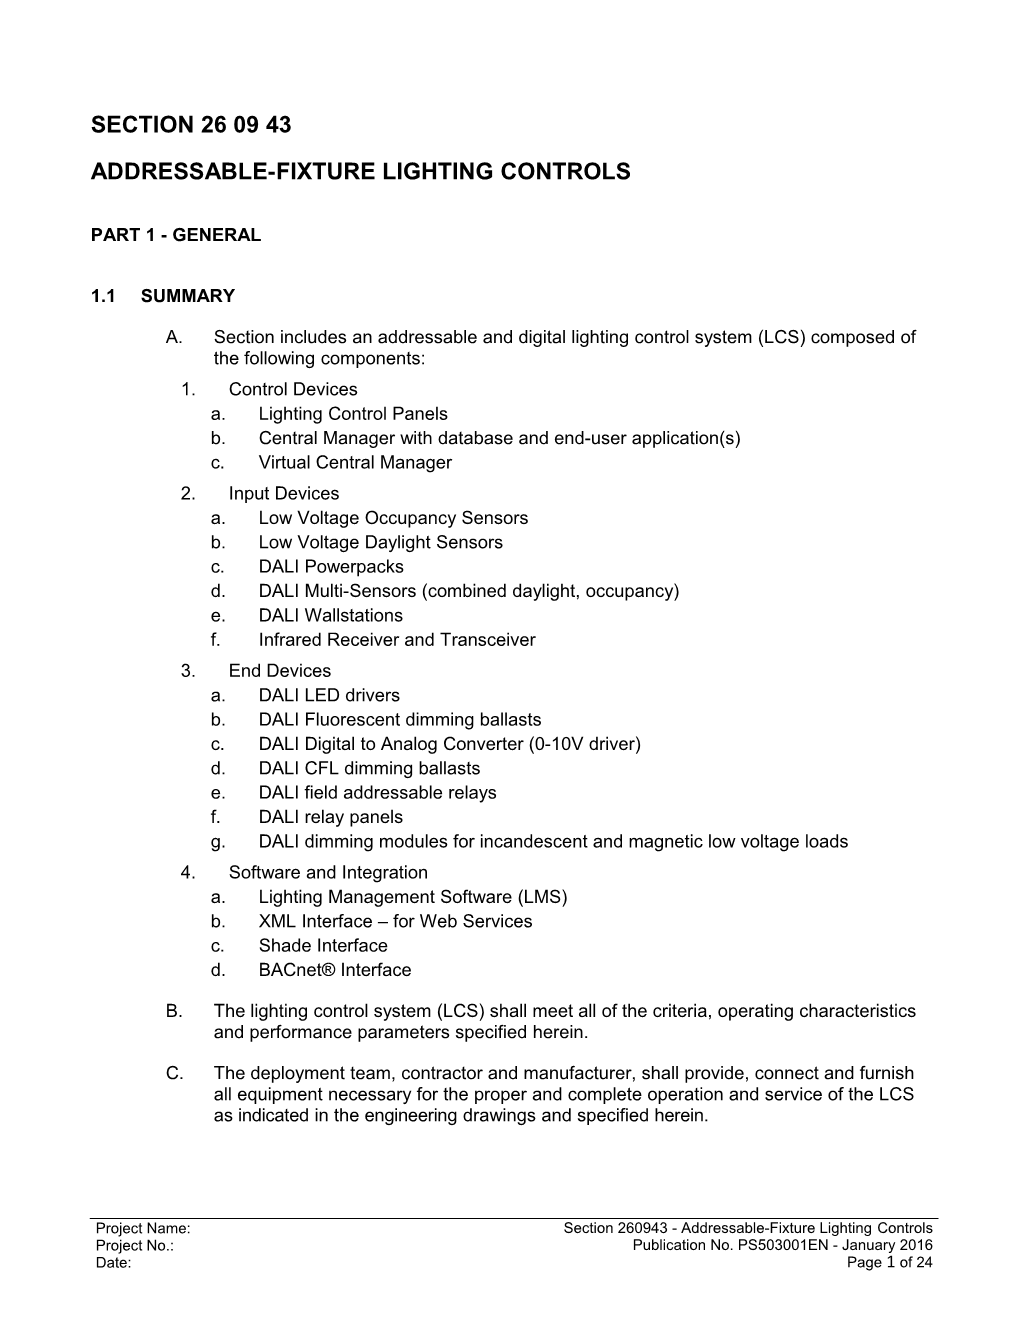 Section 260943 - Addressable-Fixture Lighting Controls